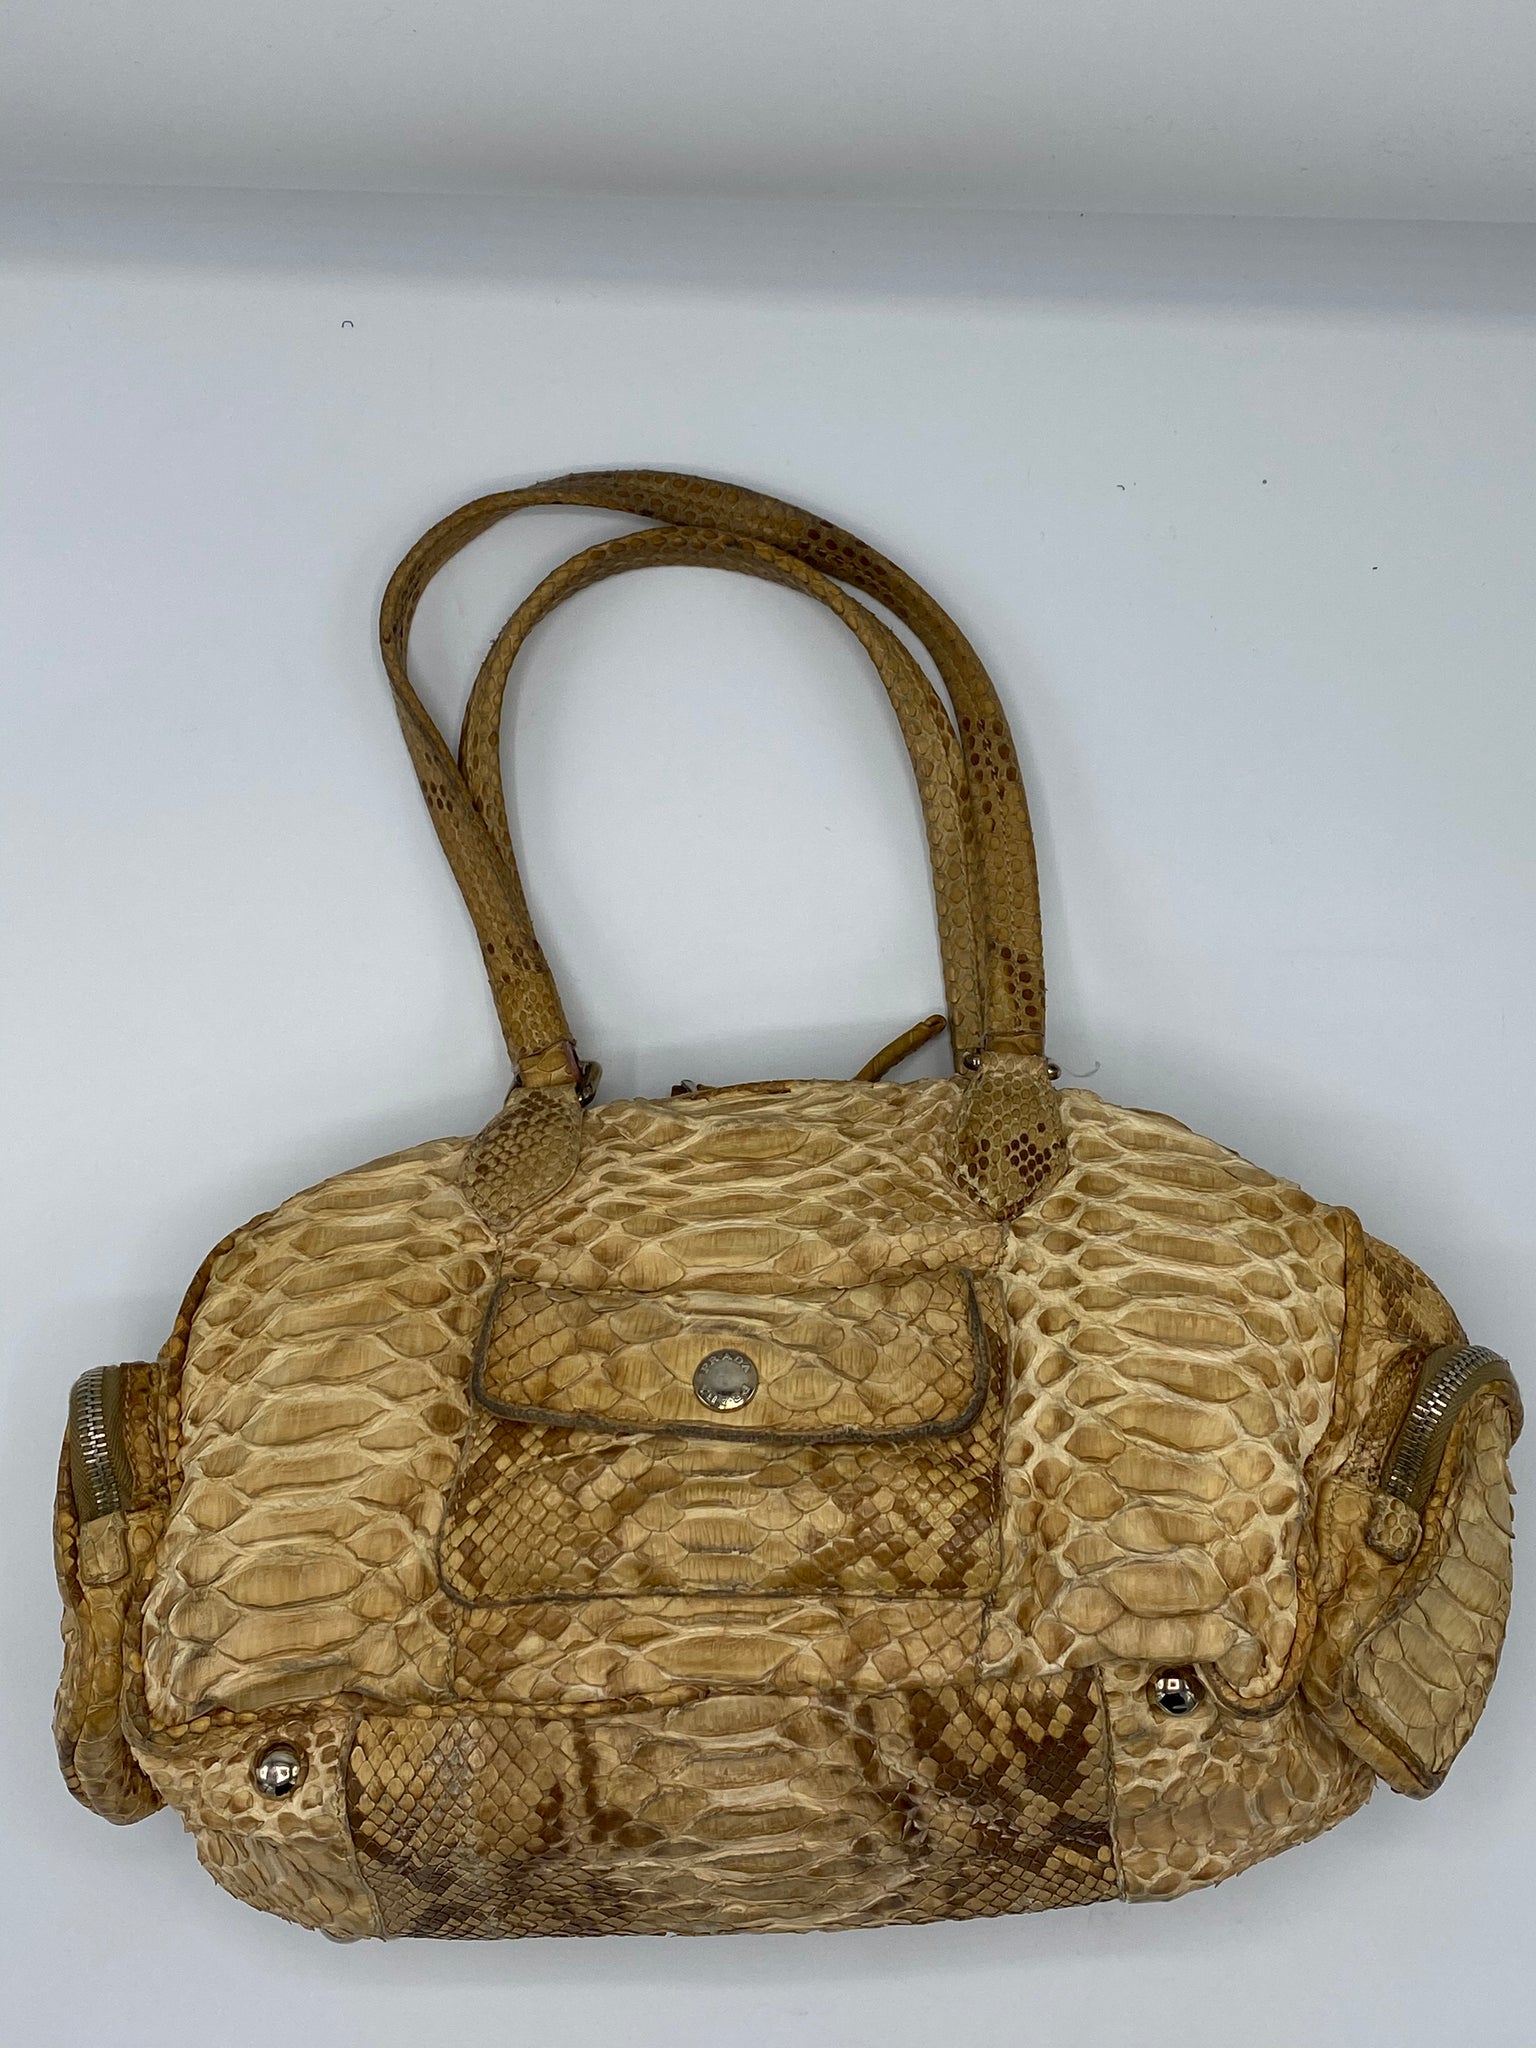 Prada Beige/Brown Python Leather Frame Handle Bag Prada